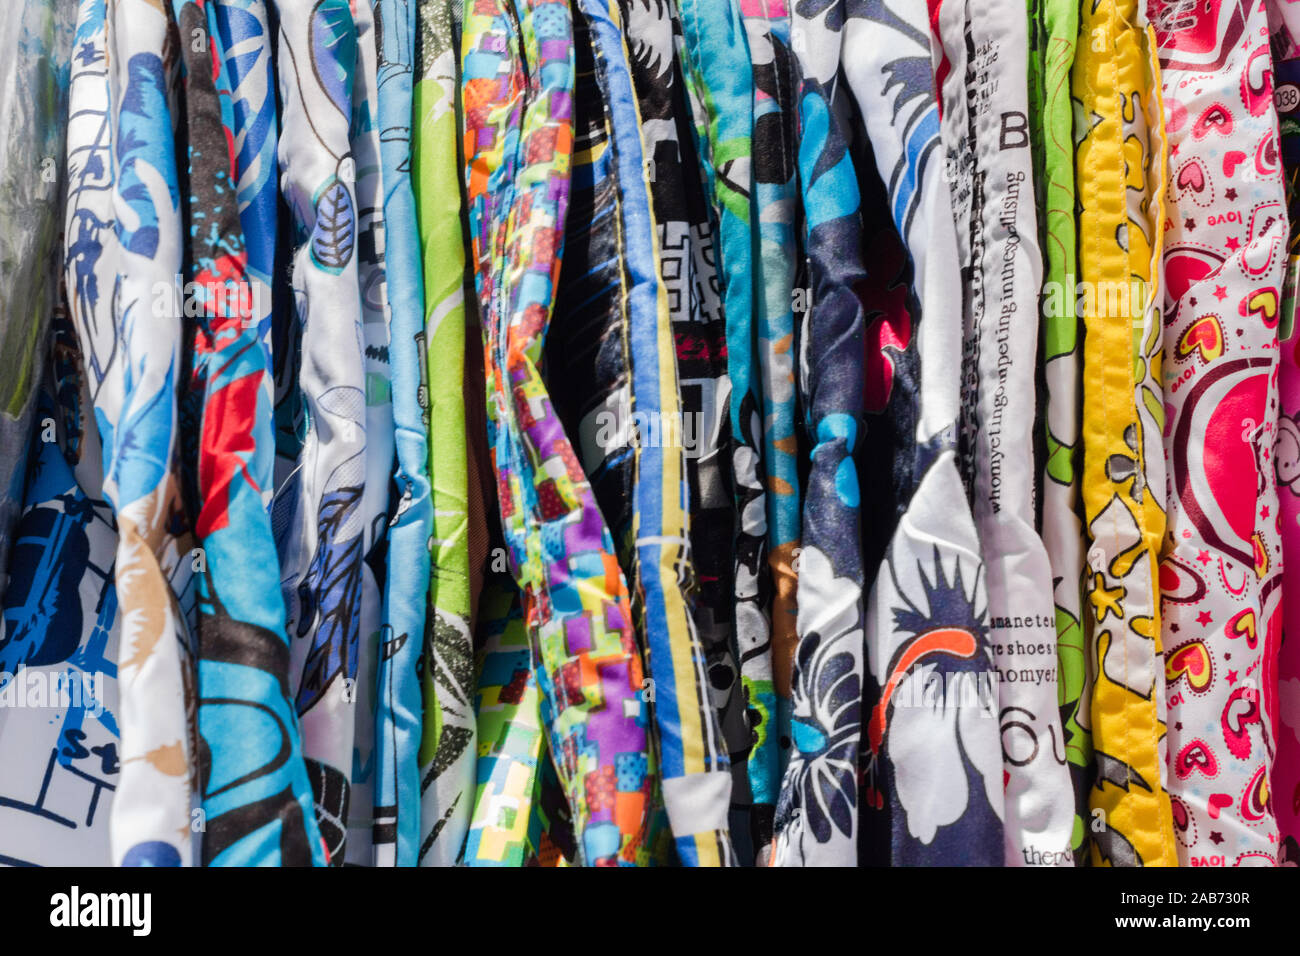 Hong Kong - November 2019: Colorful clothes lineup in flea market. Stock Photo